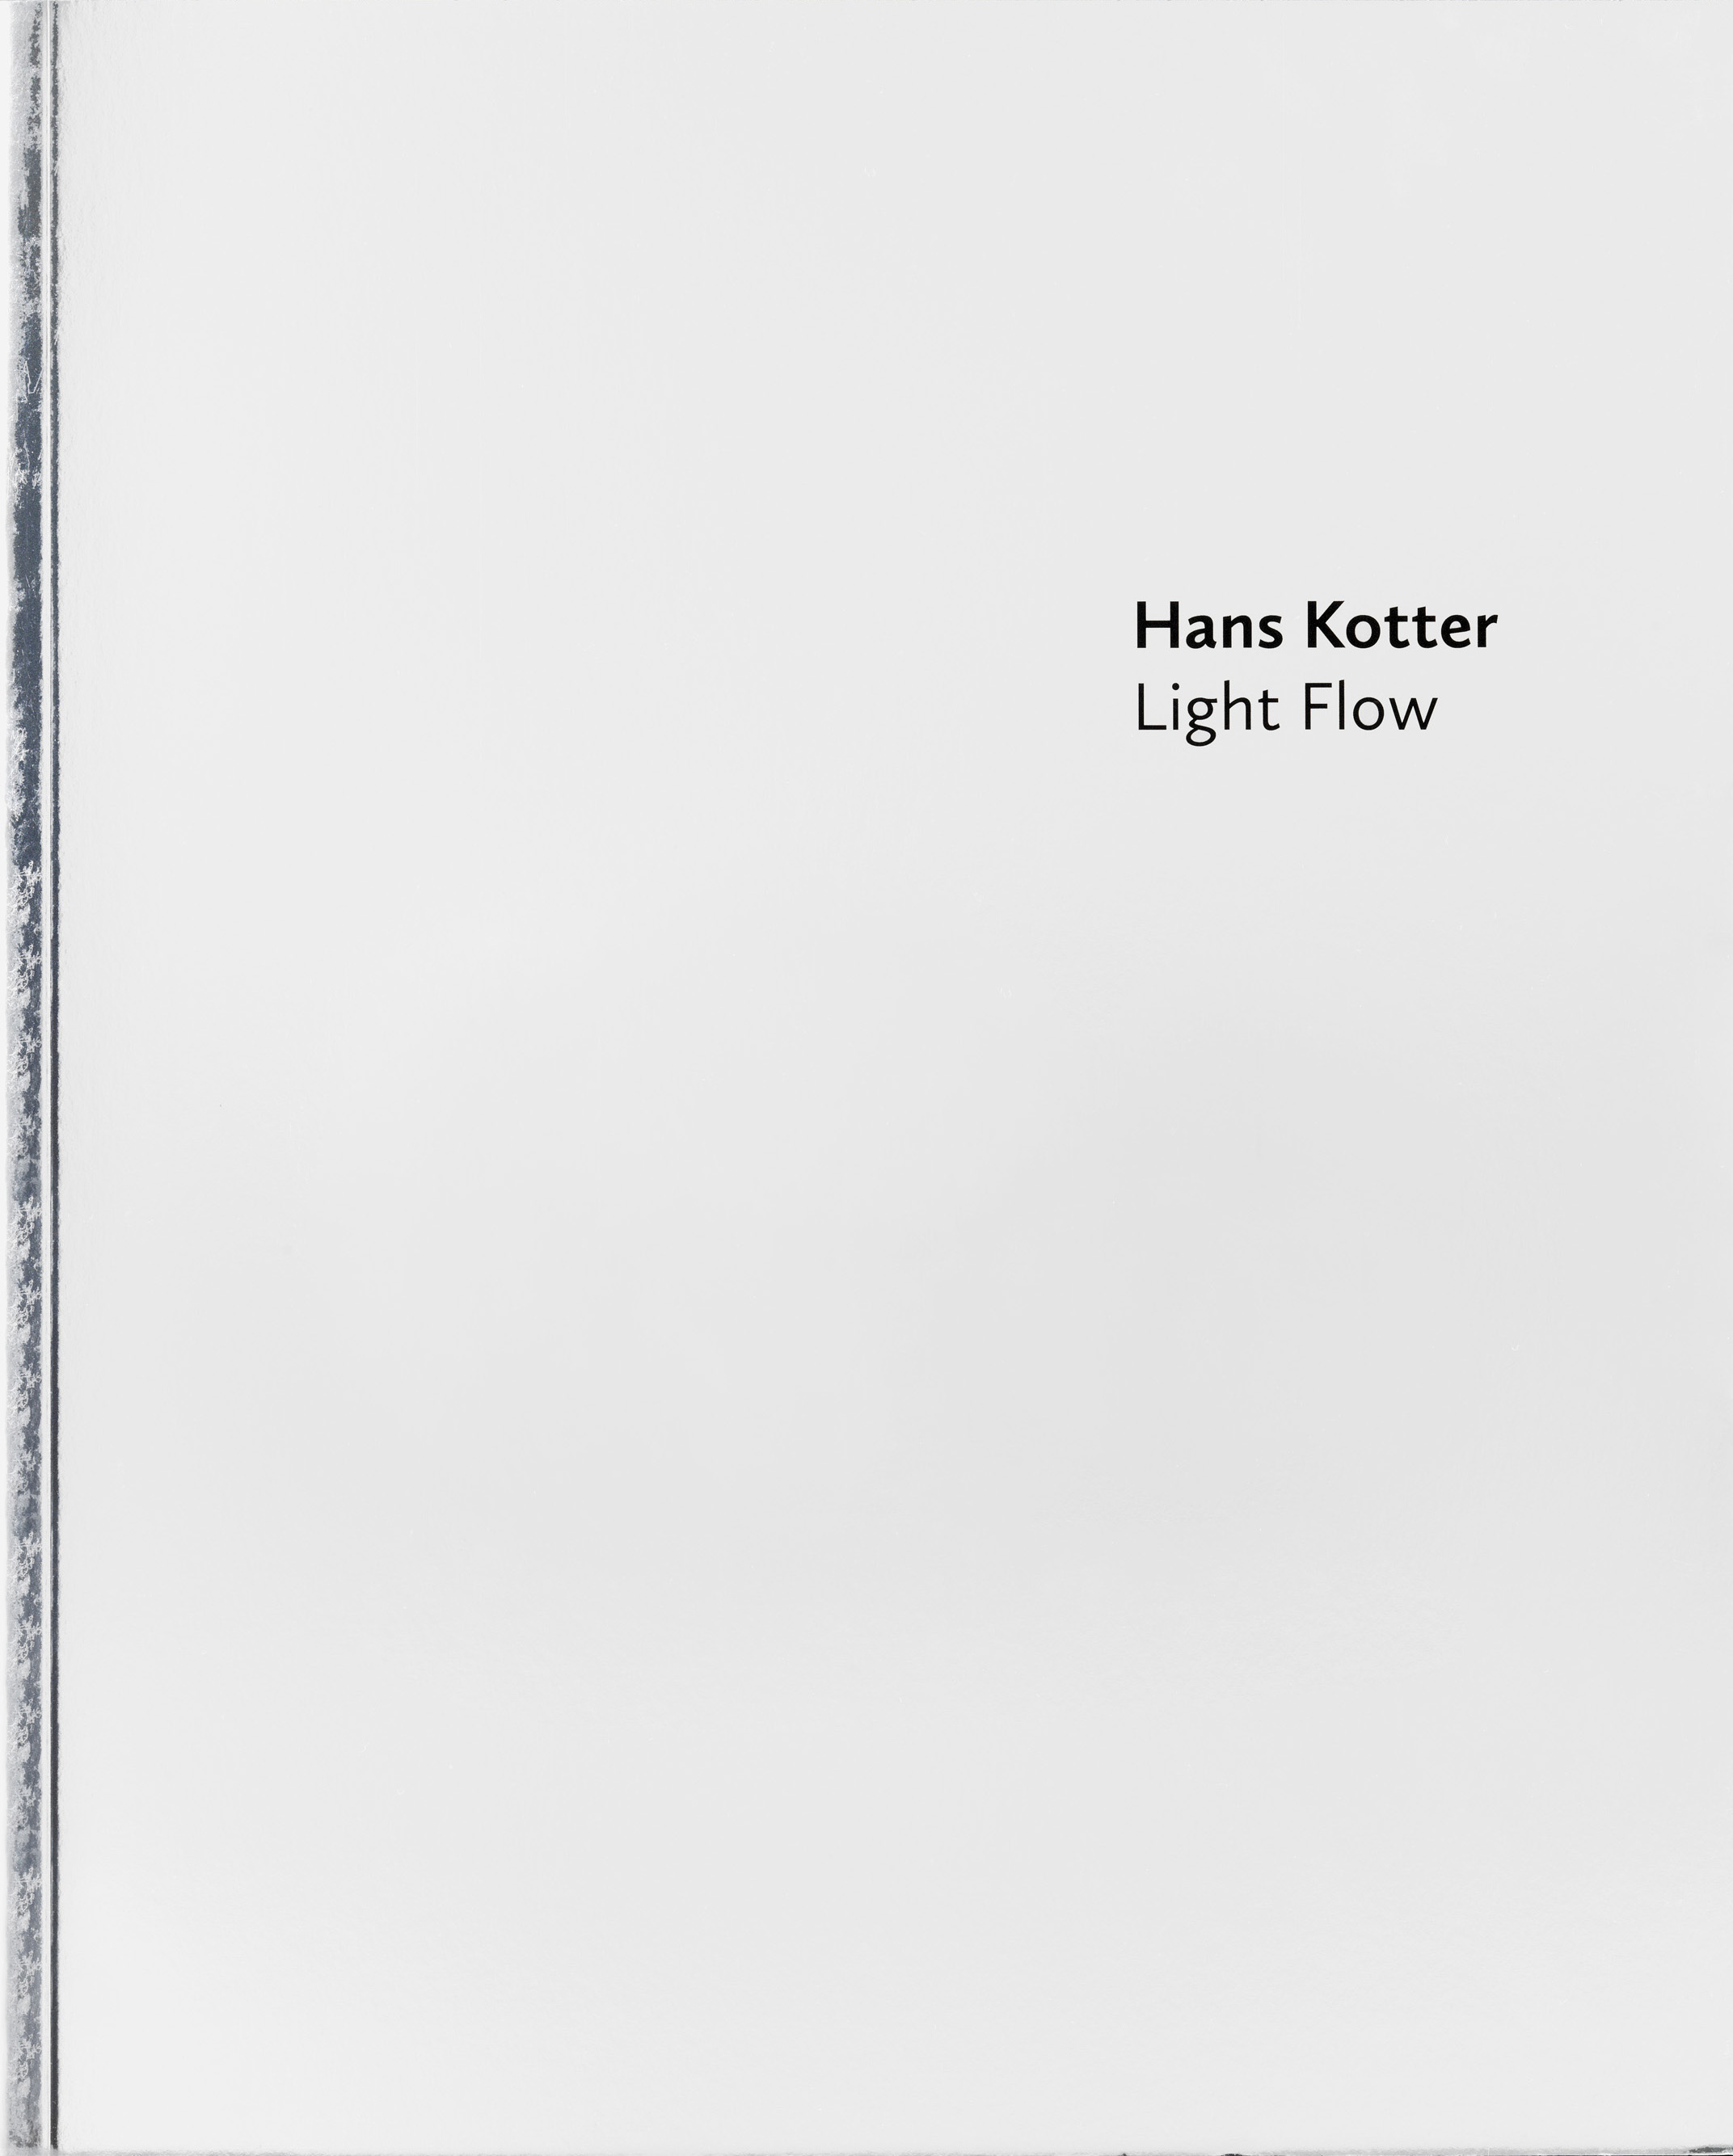 Patrick-heide-hans-kotter-light-flow